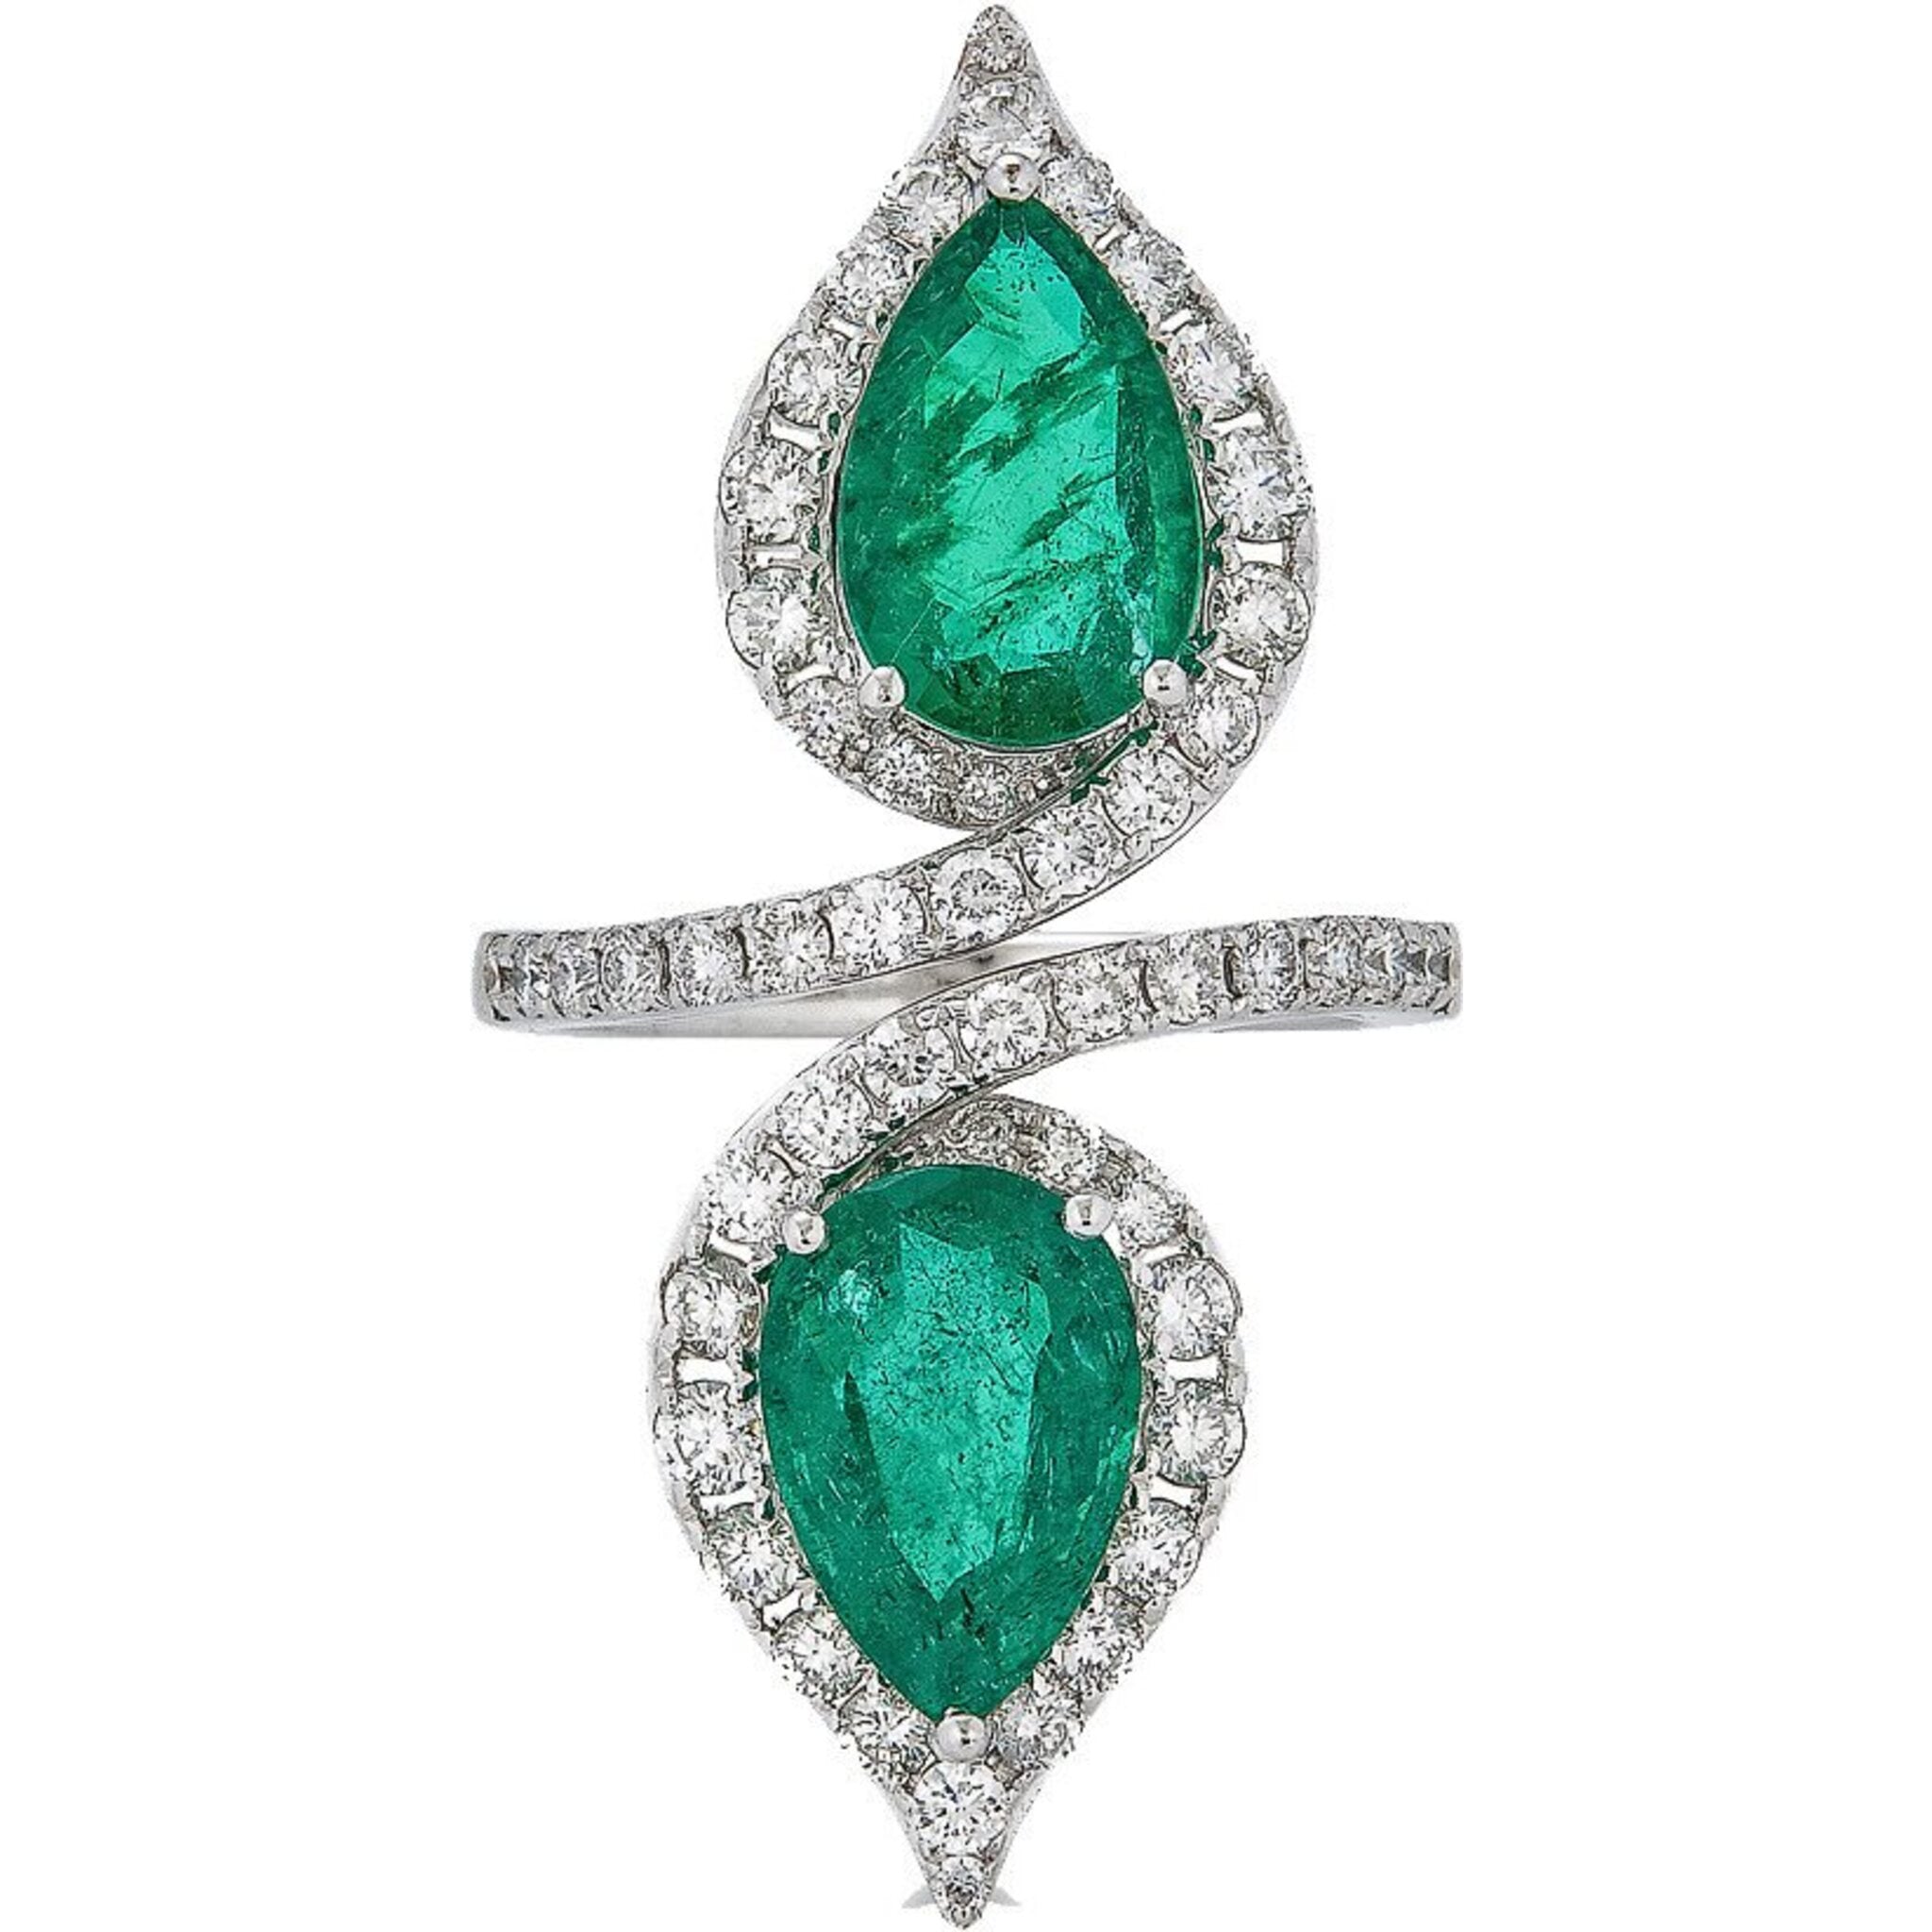 Piranesi - Two Stone Ring in Emerald - 18K White Gold